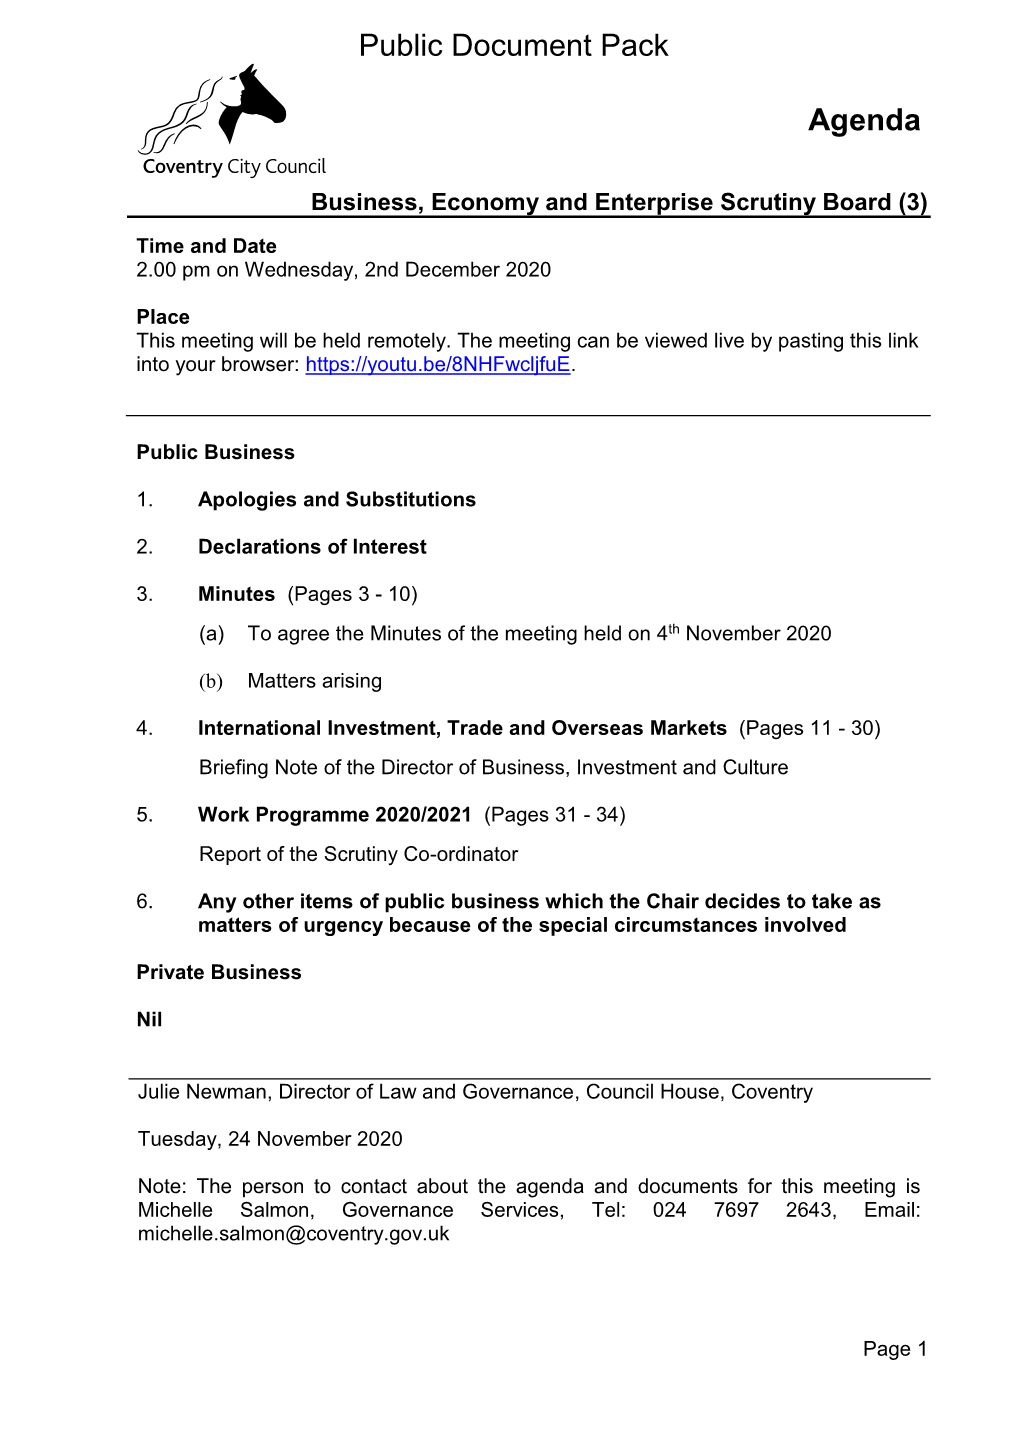 Agenda Document for Business, Economy and Enterprise Scrutiny Board